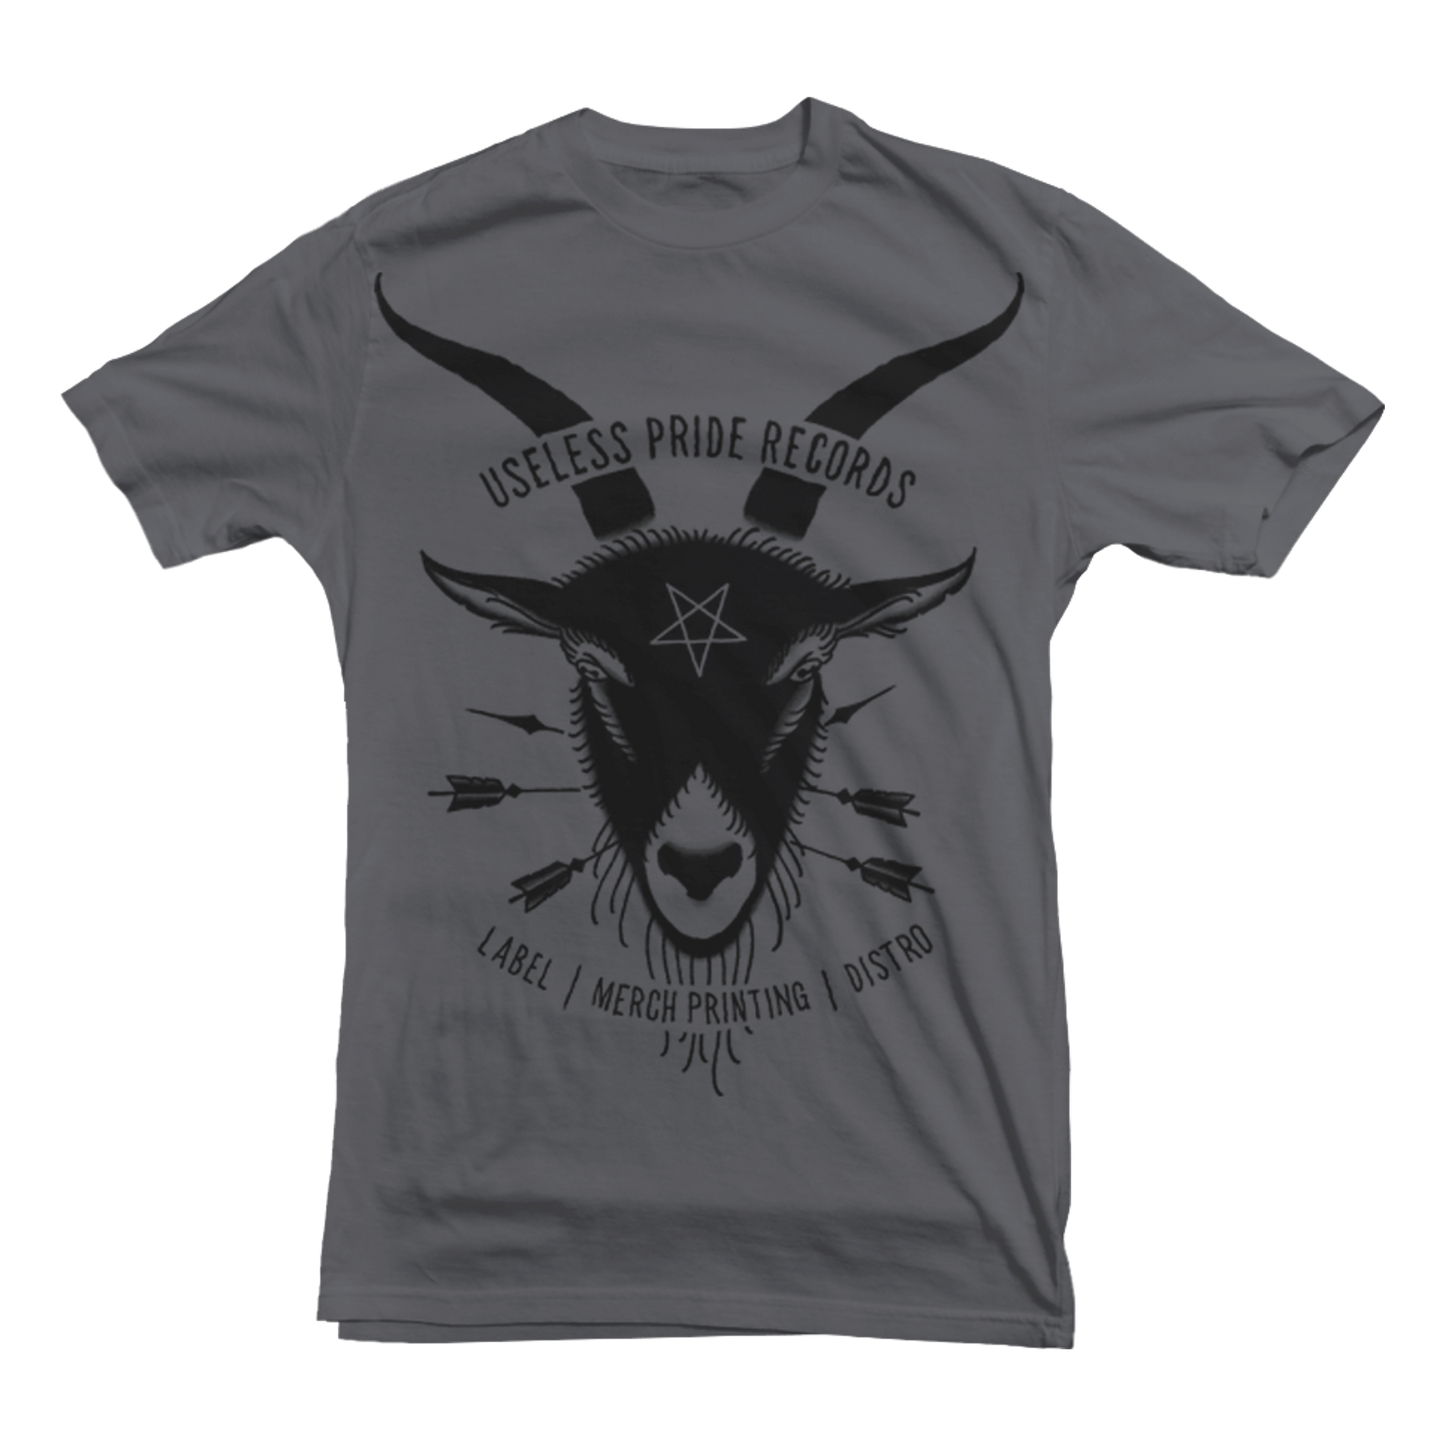 USELESS PRIDE RECORDS "Goat" Dark Heather T-Shirt